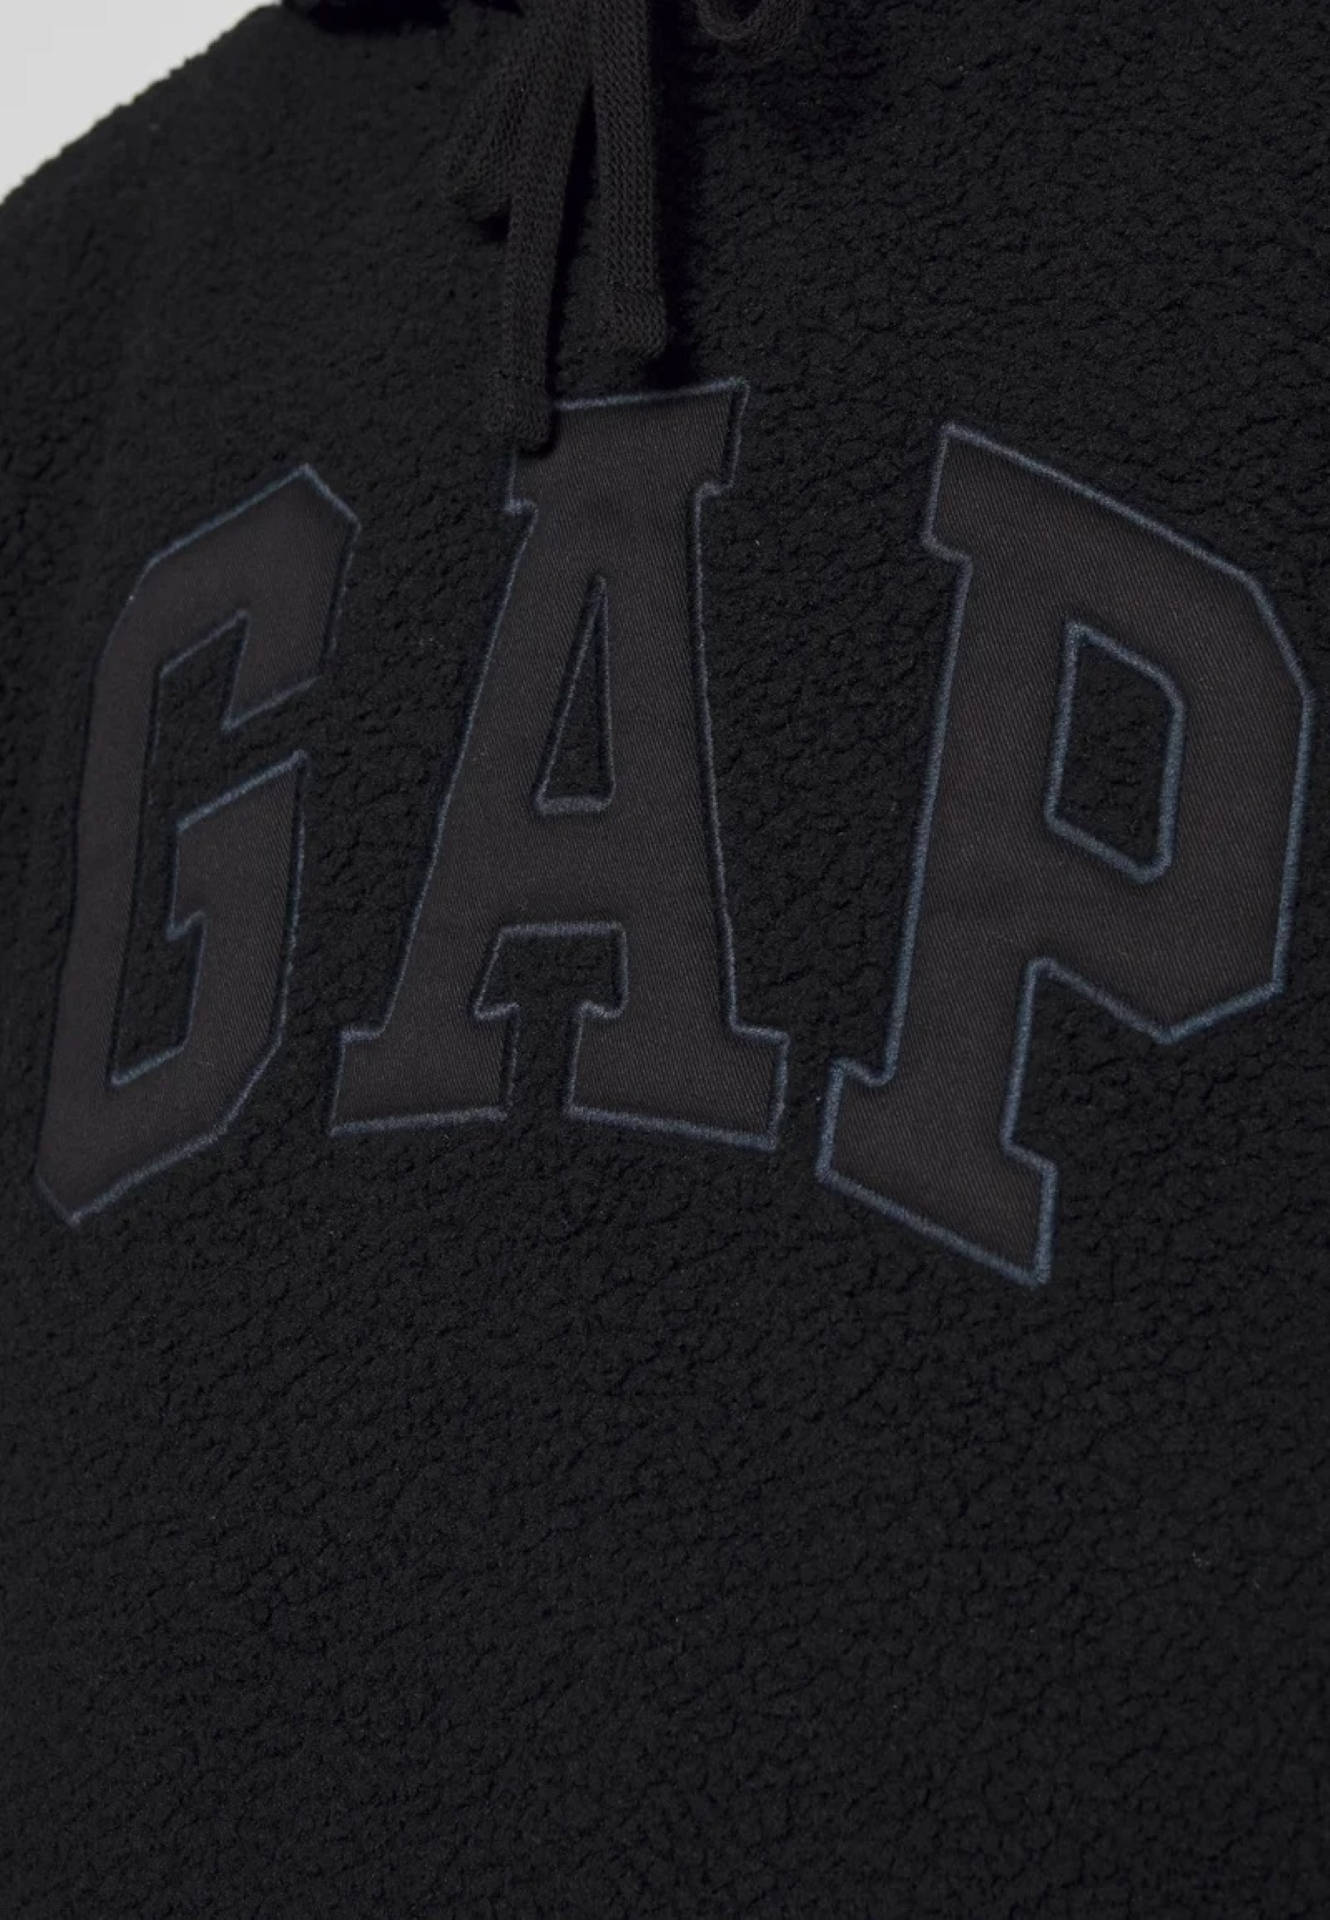 Black Gap Logo On Fleece Background